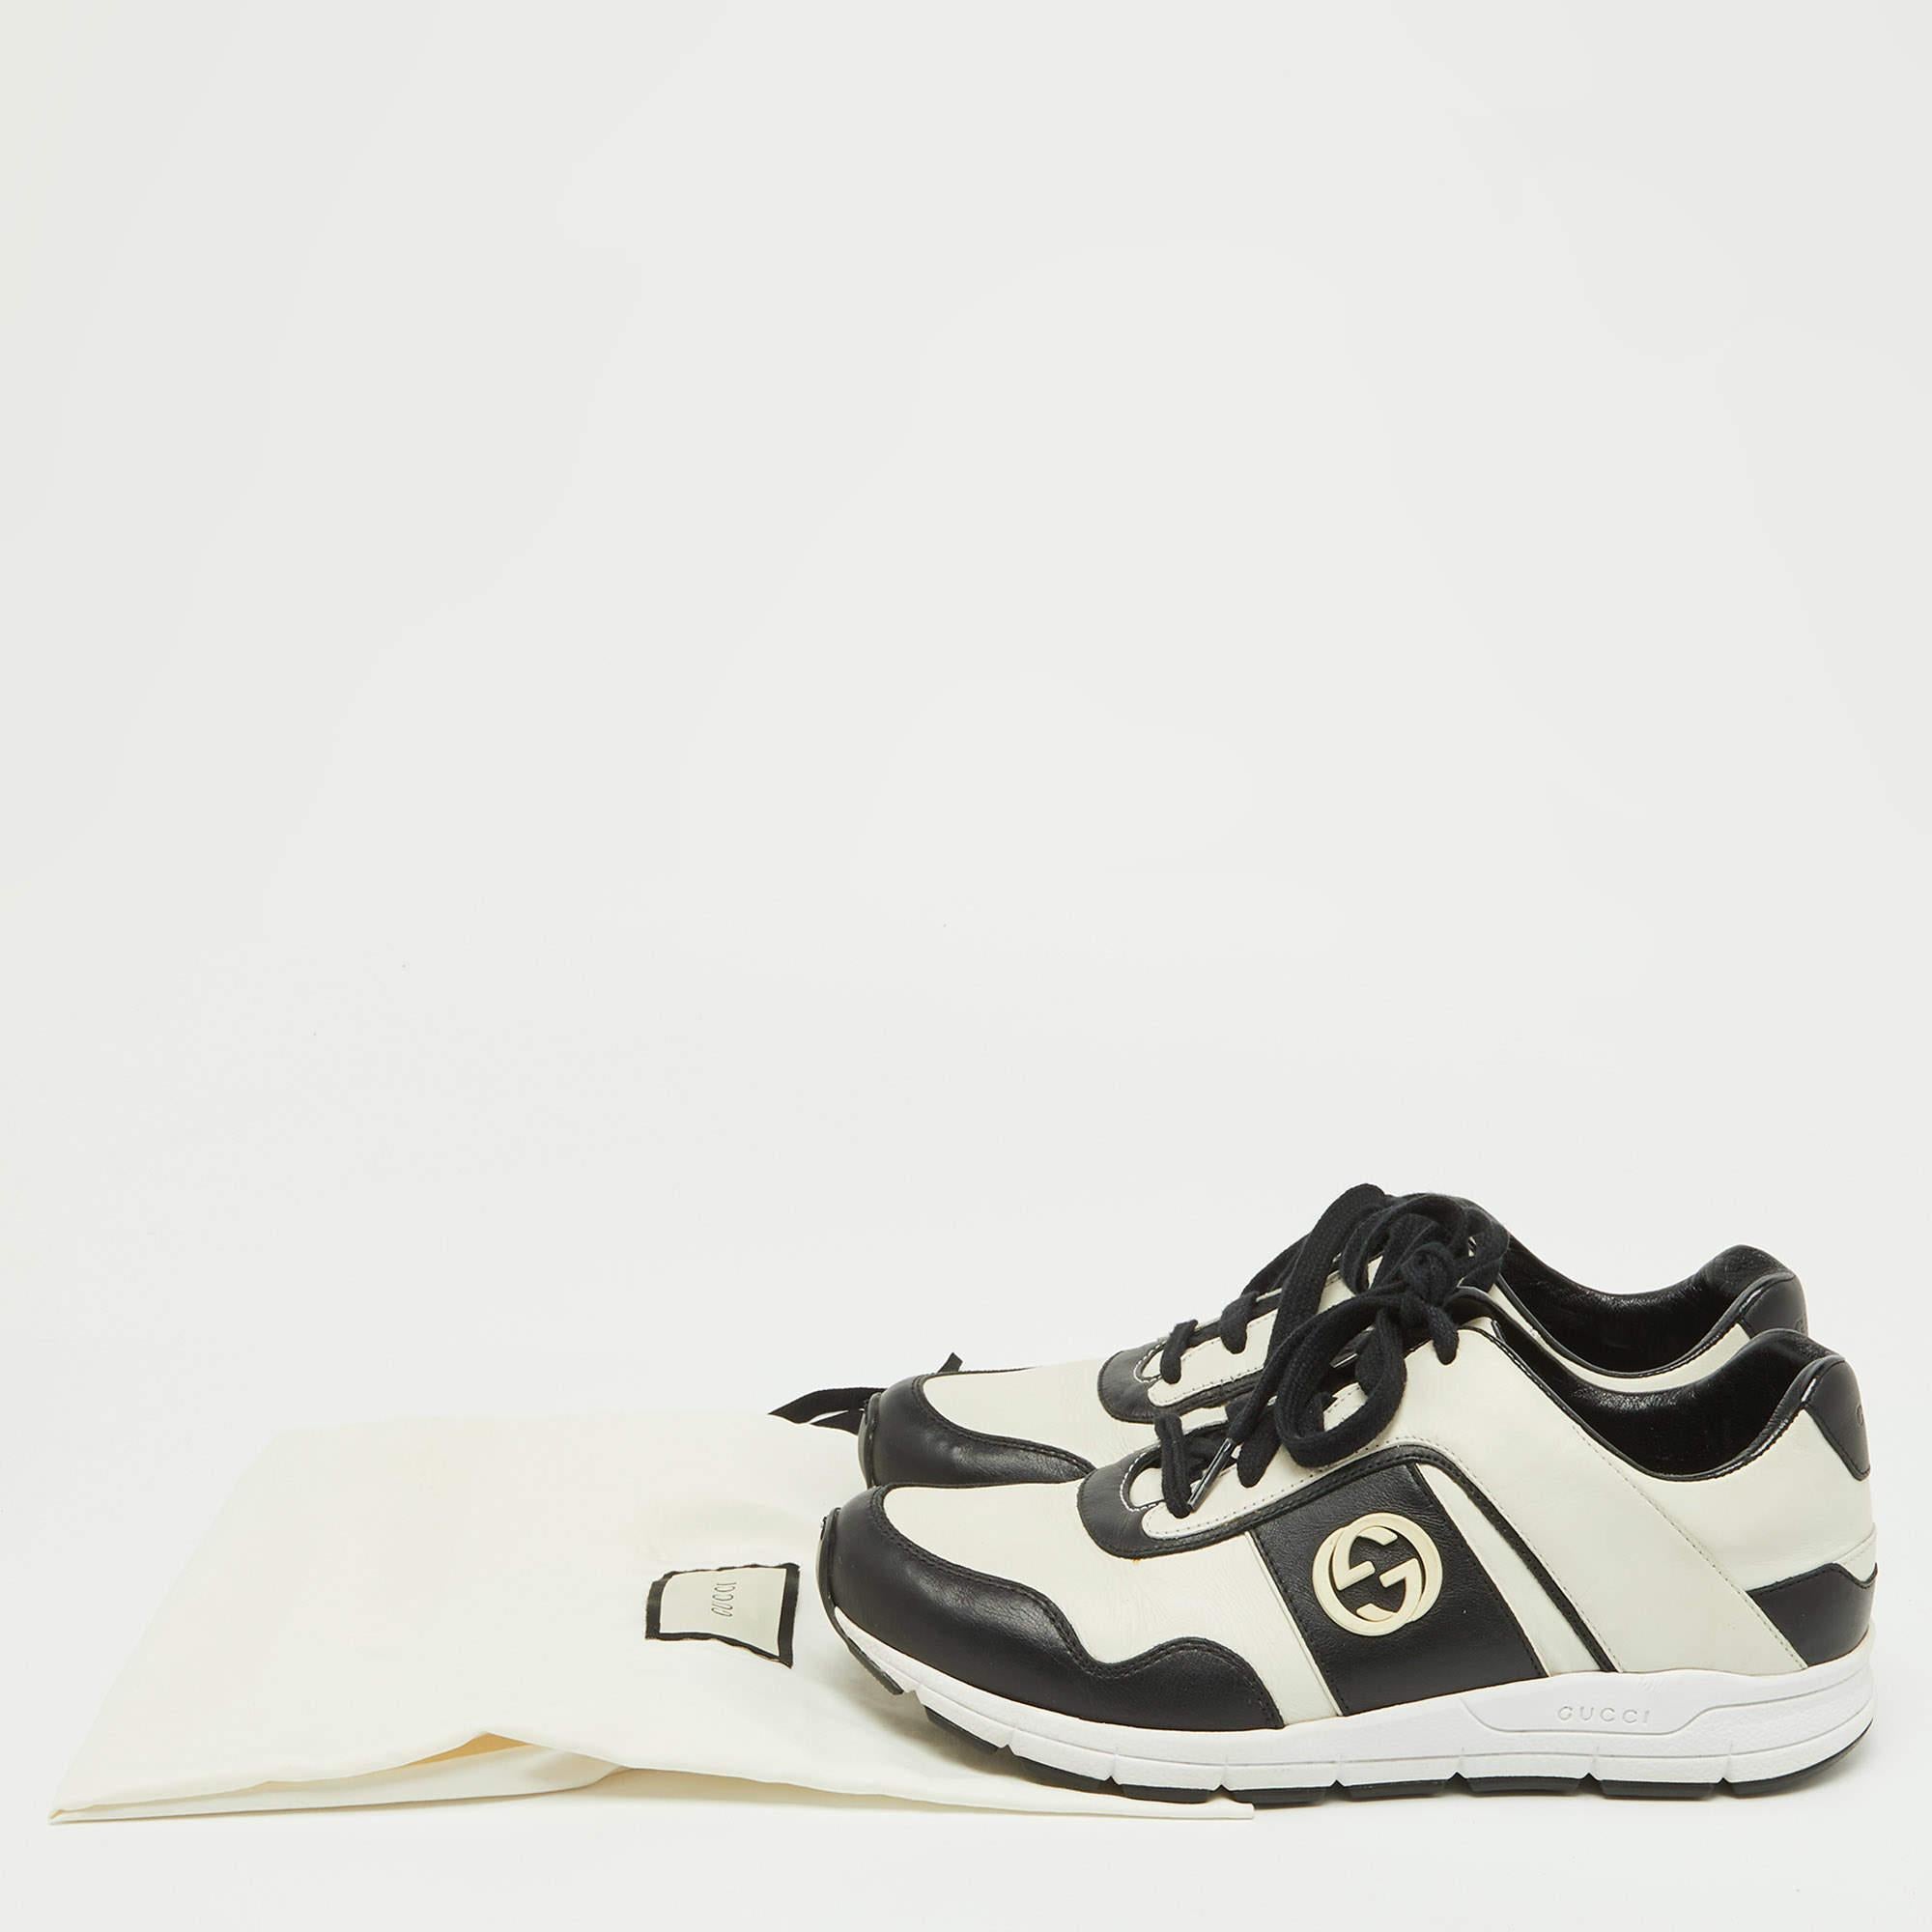 Gucci Black/White Leather Miro Sneakers Size 38.5 5